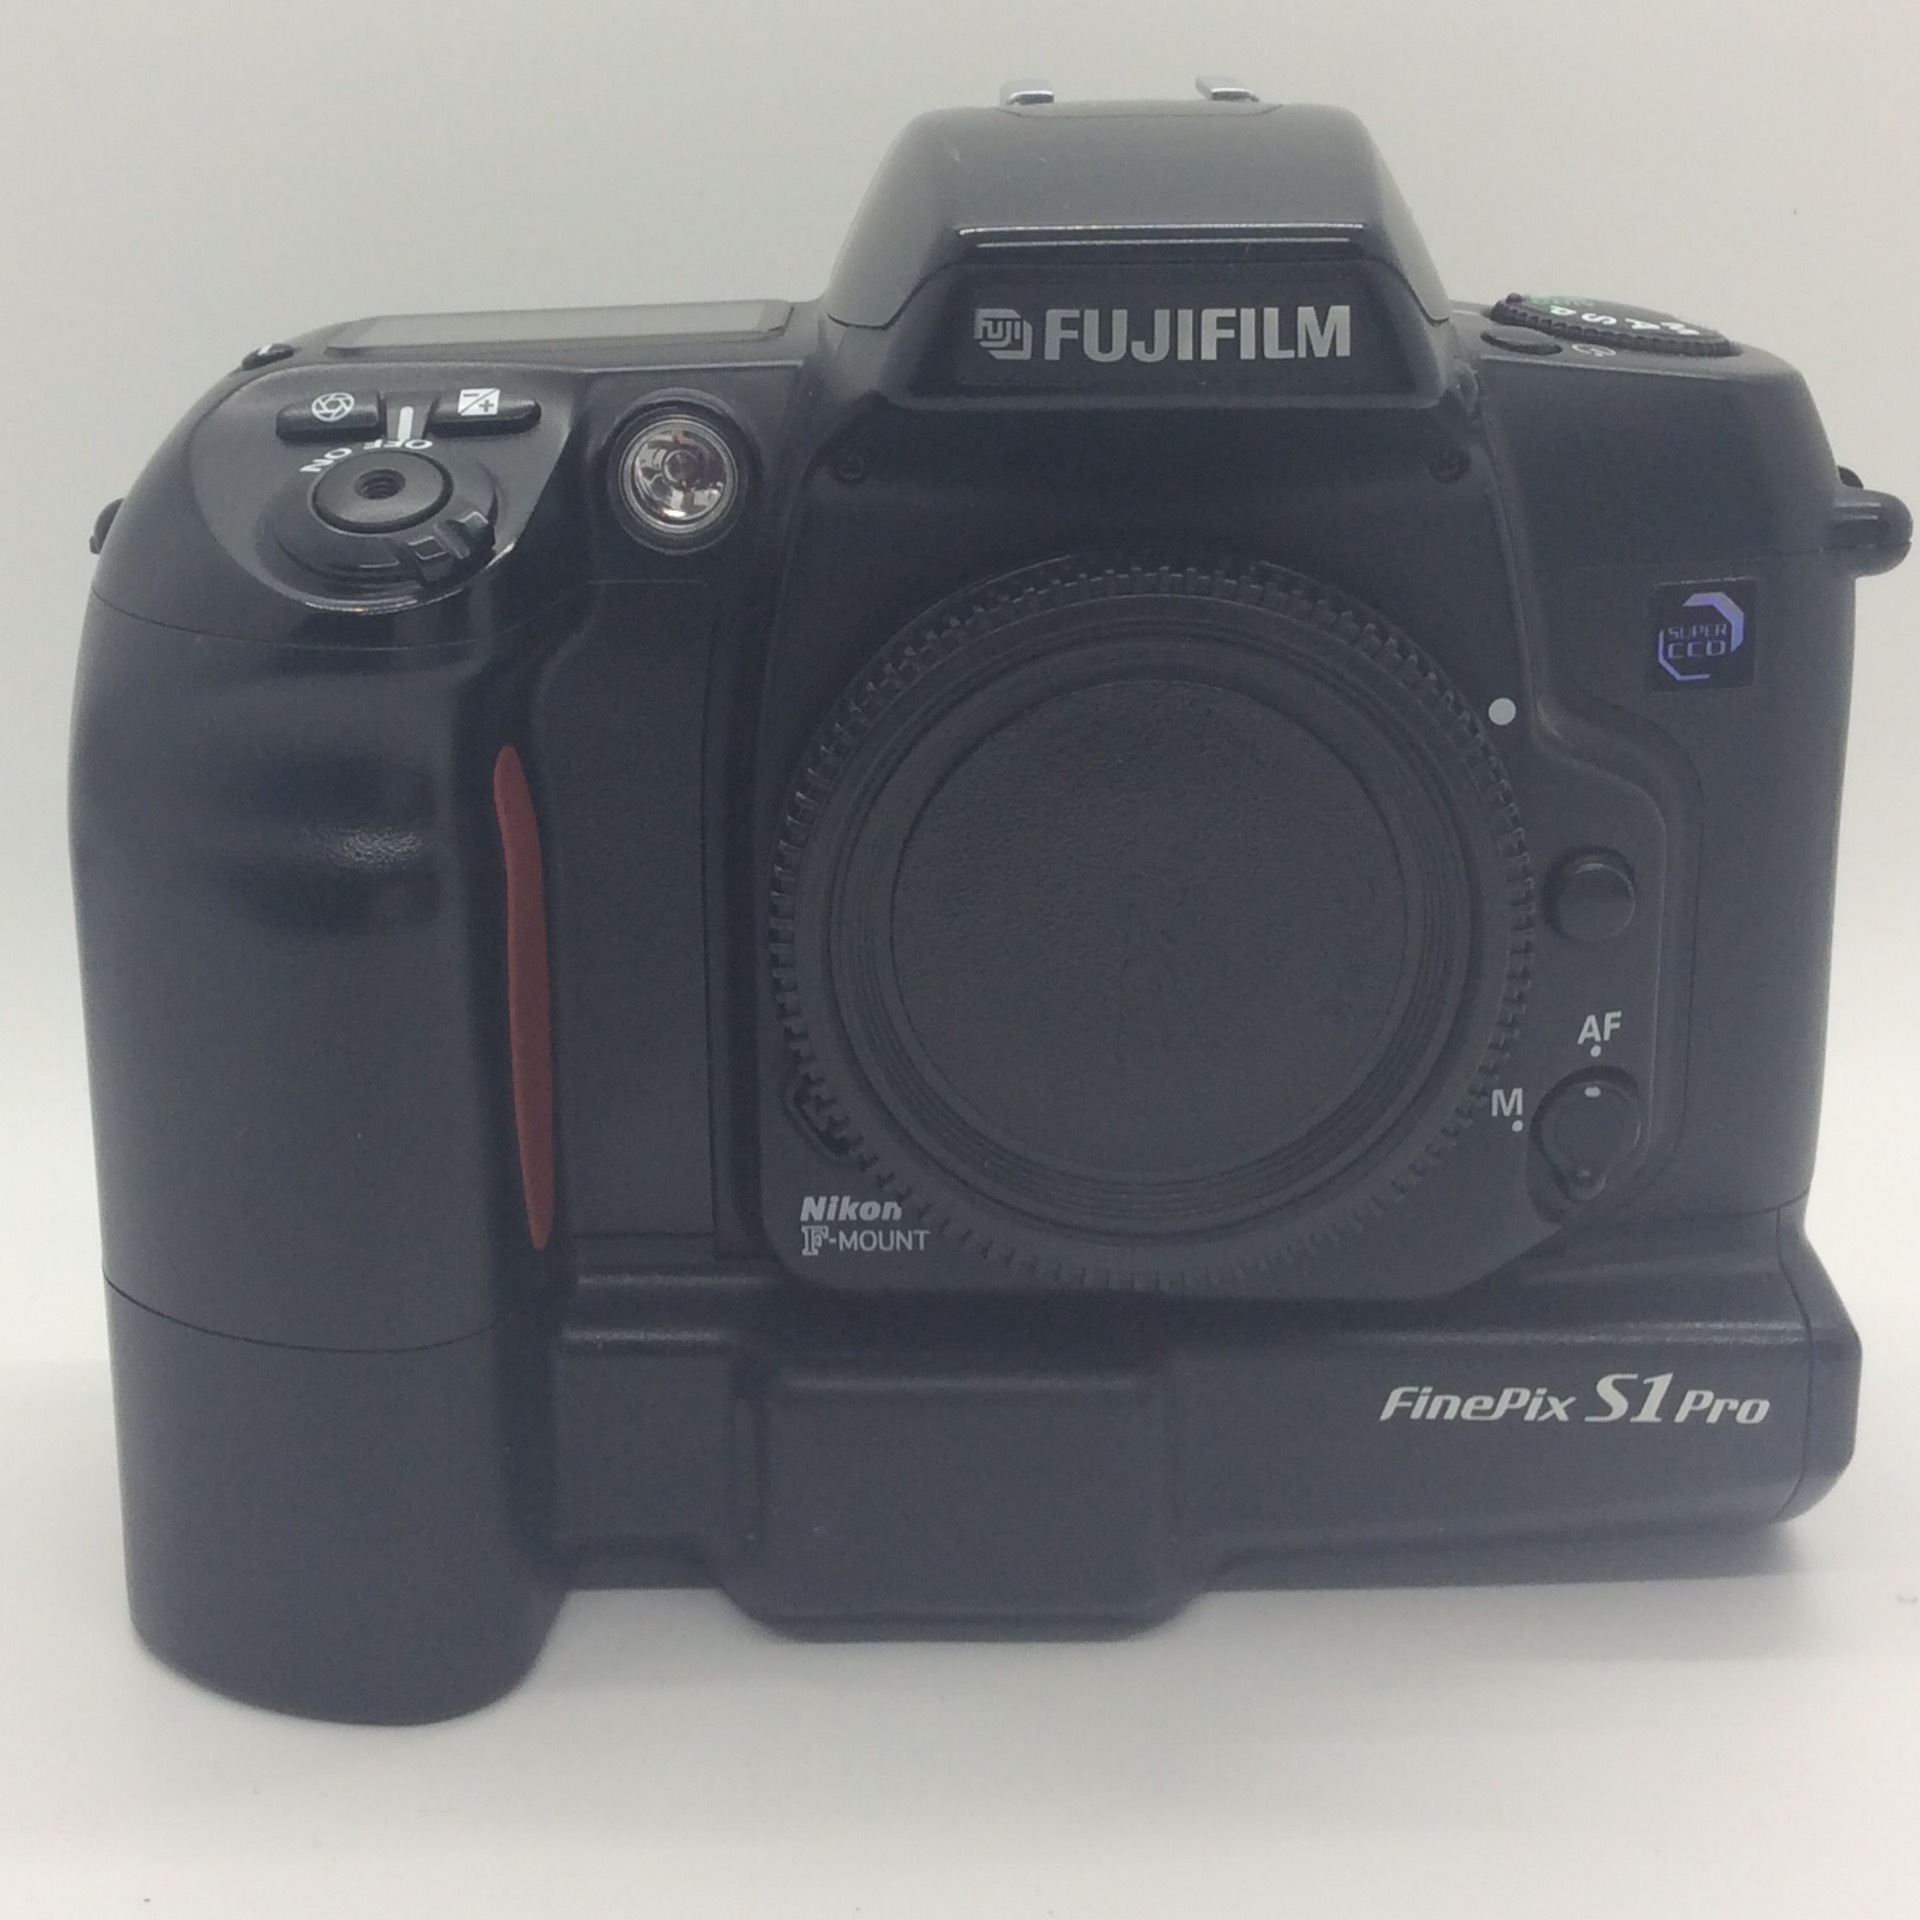 Elastisch Wijden wijn Fujifilm FinePix S1 Pro Used Camera rm | The Camera Store